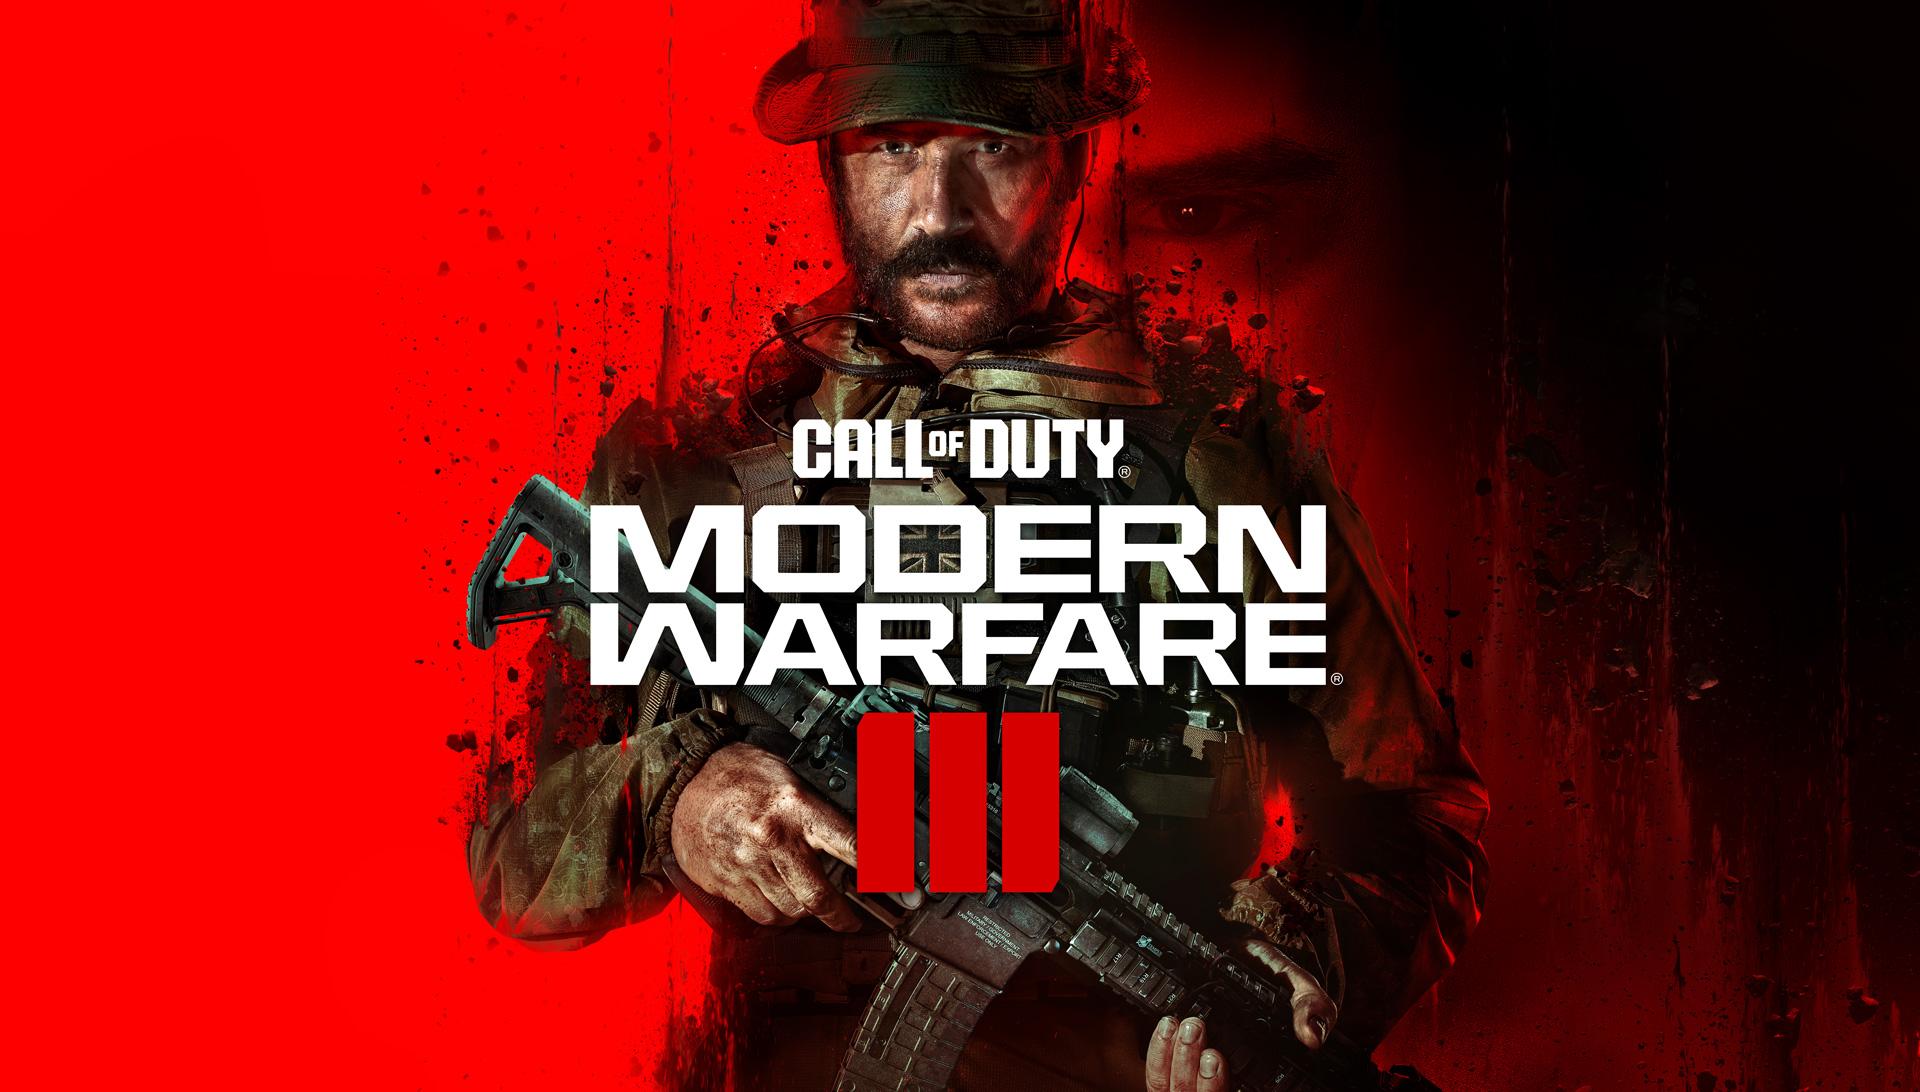 Modern Warfare II Ghost Art Coffee Mug - Call of Duty Store